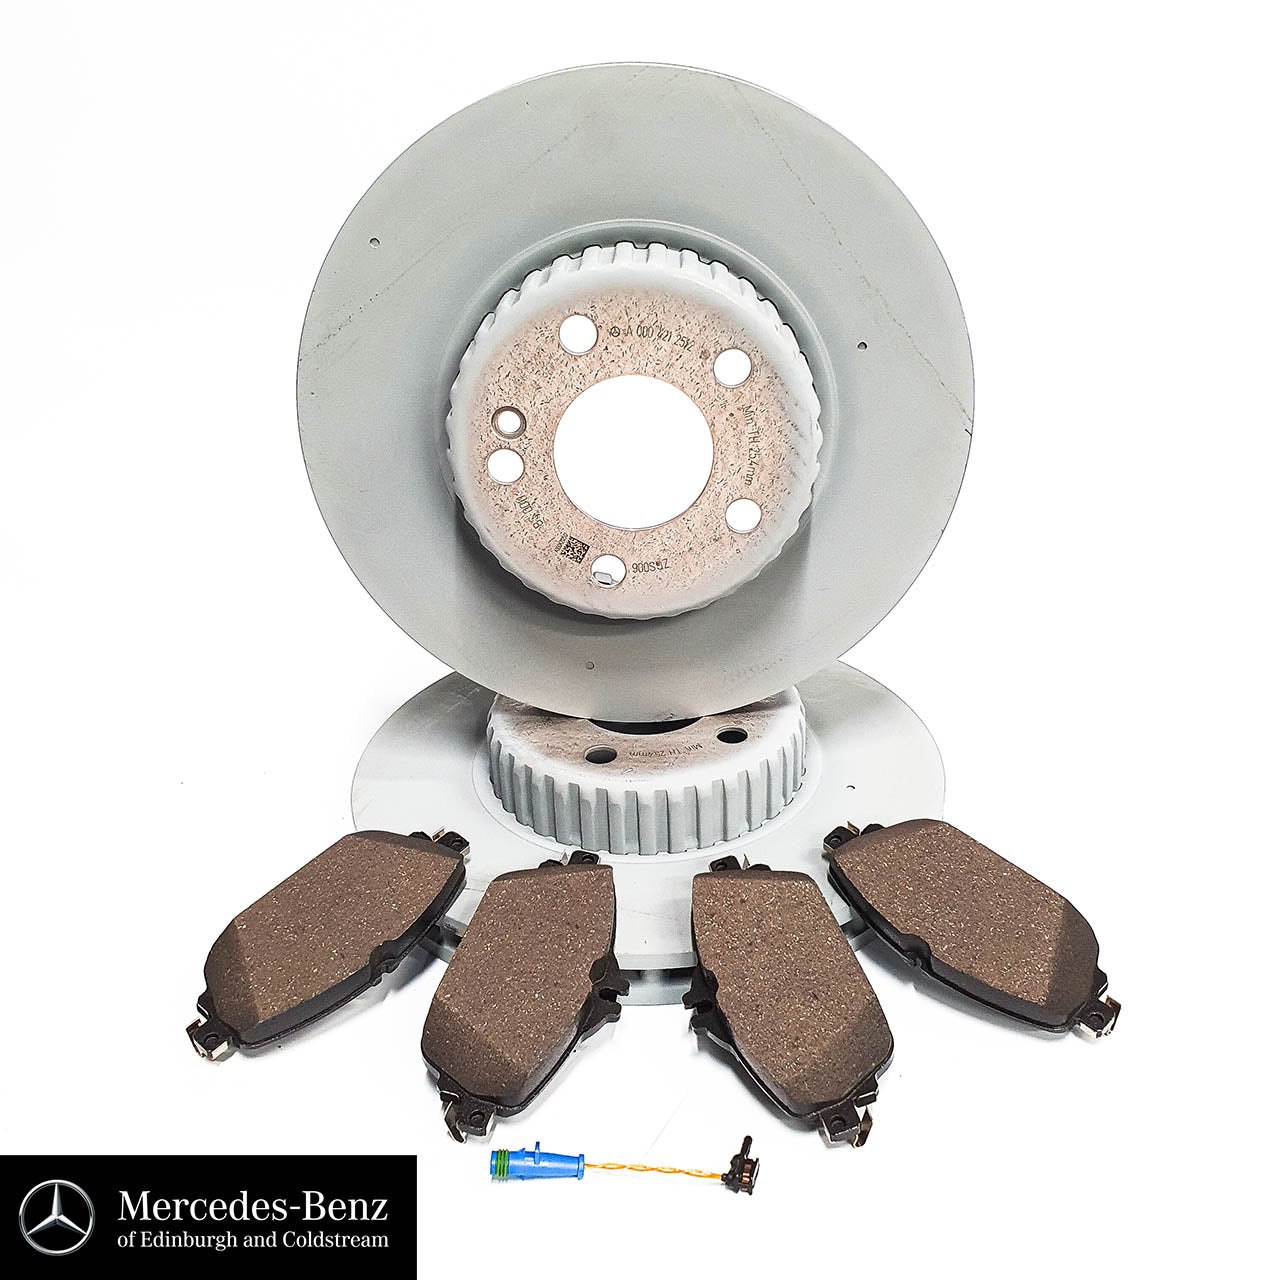 Genuine Mercedes-Benz brake pad & disc set - Front - C Class 205, E Class 213 model series